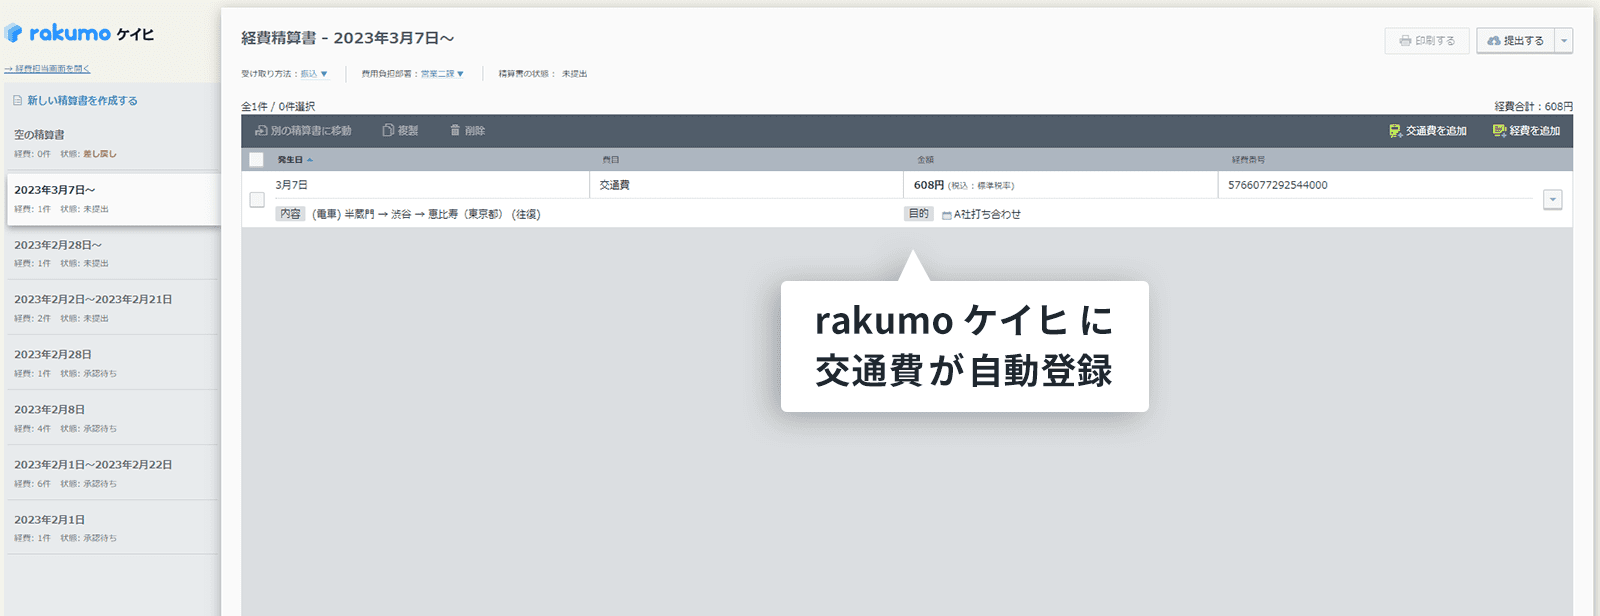 rakumo ケイヒ 経路を選択・登録後、rakumo ケイヒに交通費が自動登録